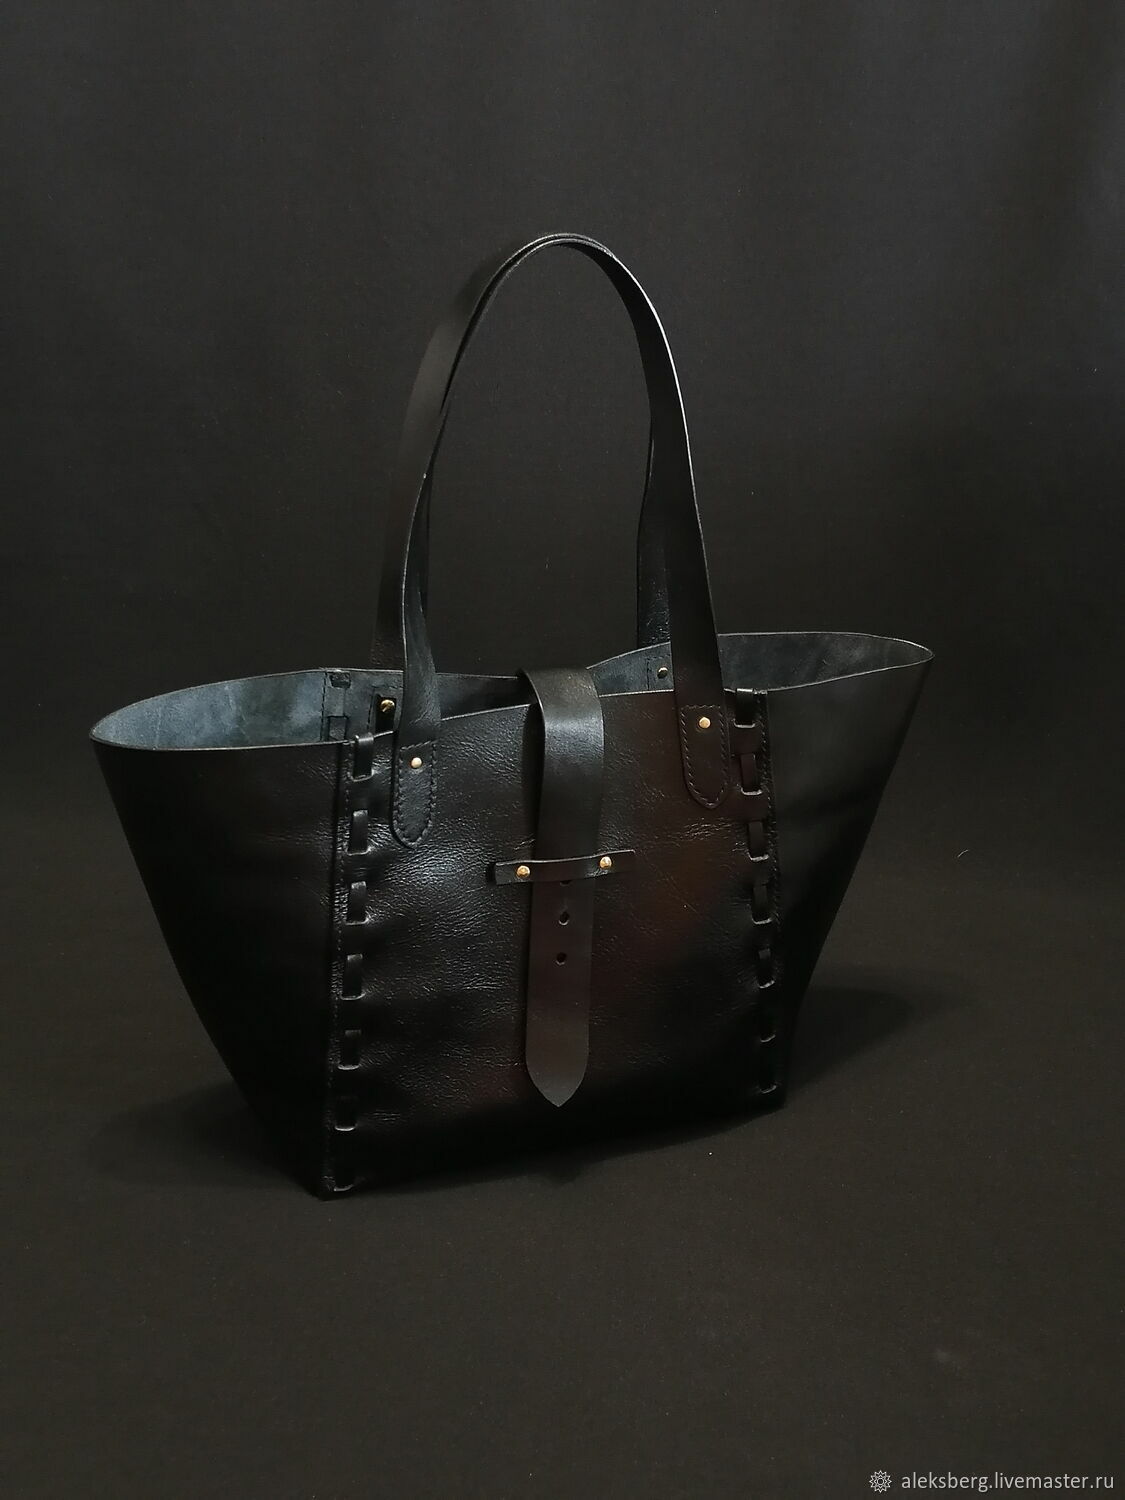 Shopper bag complete with clutch, Shopper, Barnaul,  Фото №1